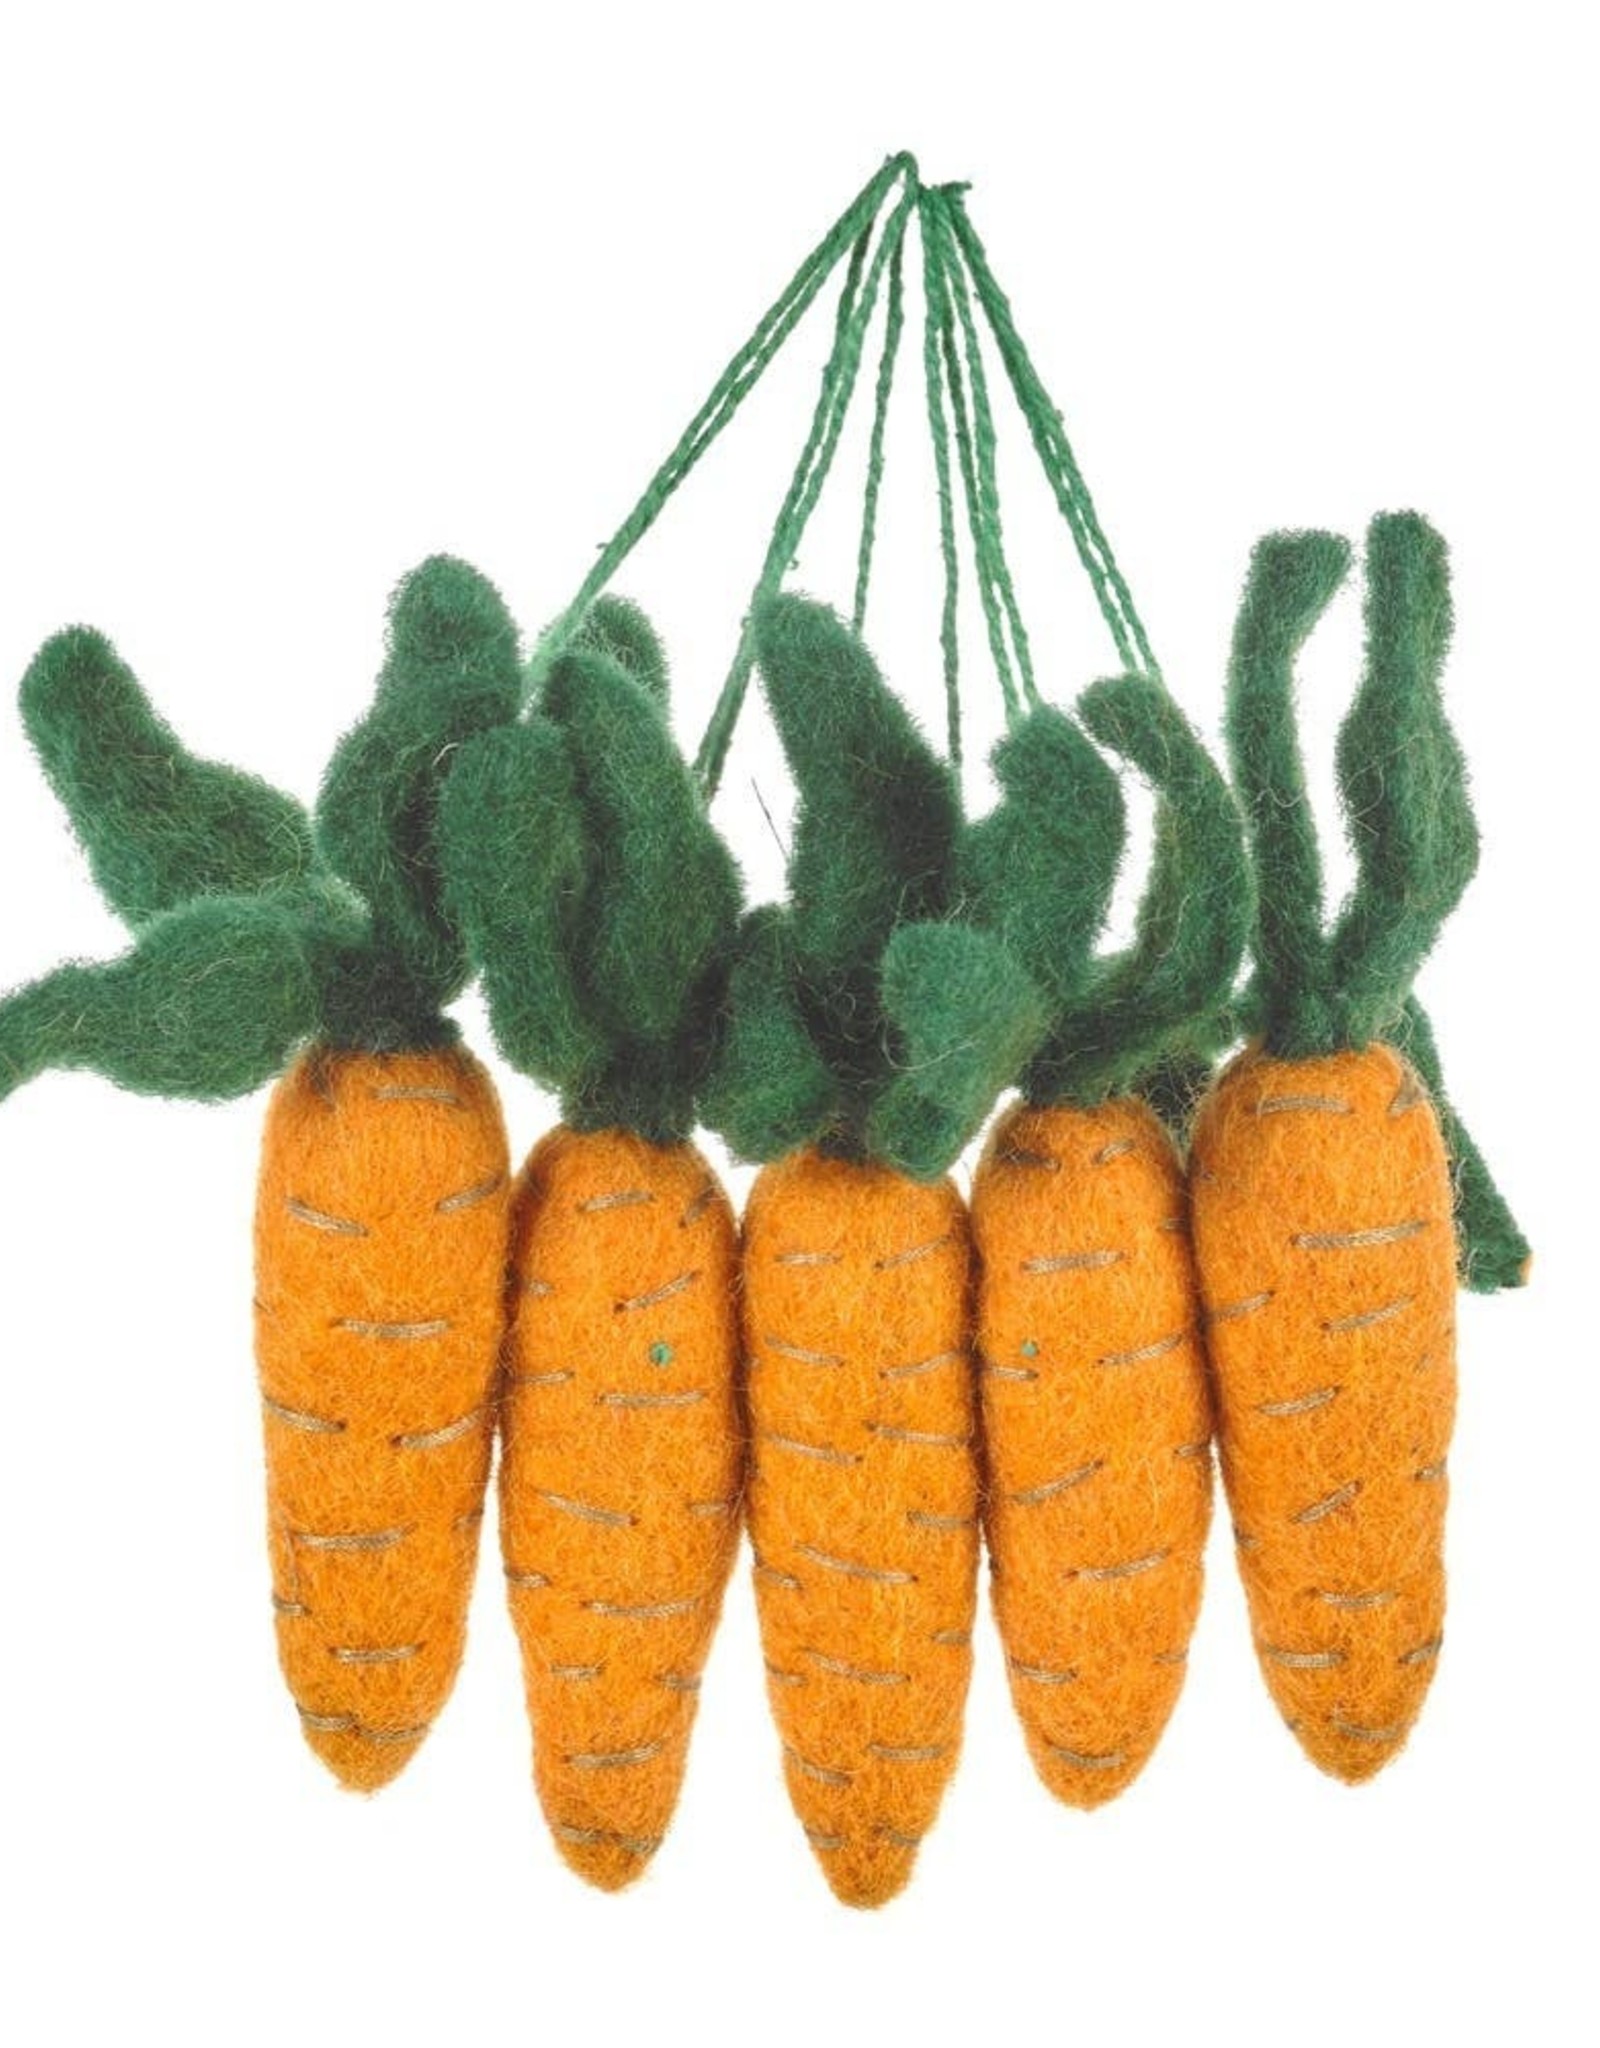 Felt So Good Handmade Hanging Carrots - Biodegradable Hanging